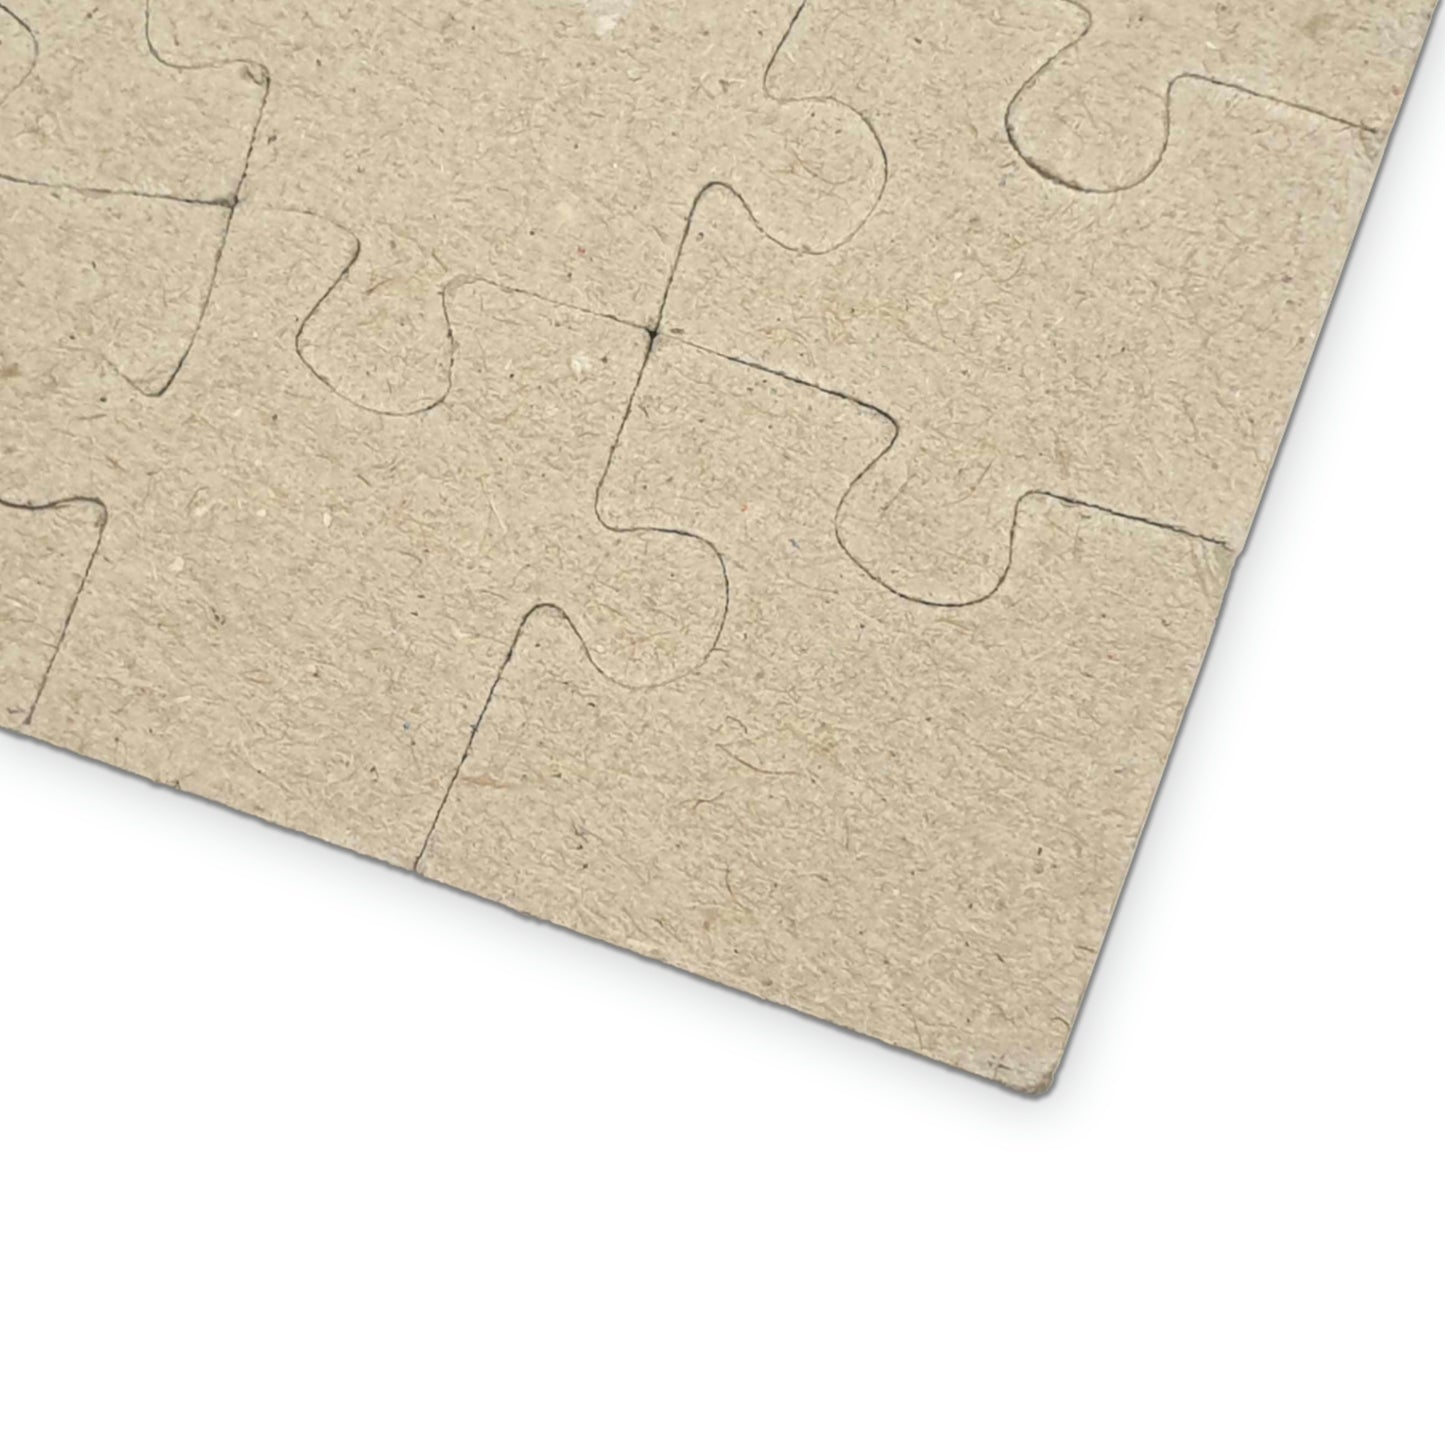 The Coterie - 1000 Piece Jigsaw Puzzle